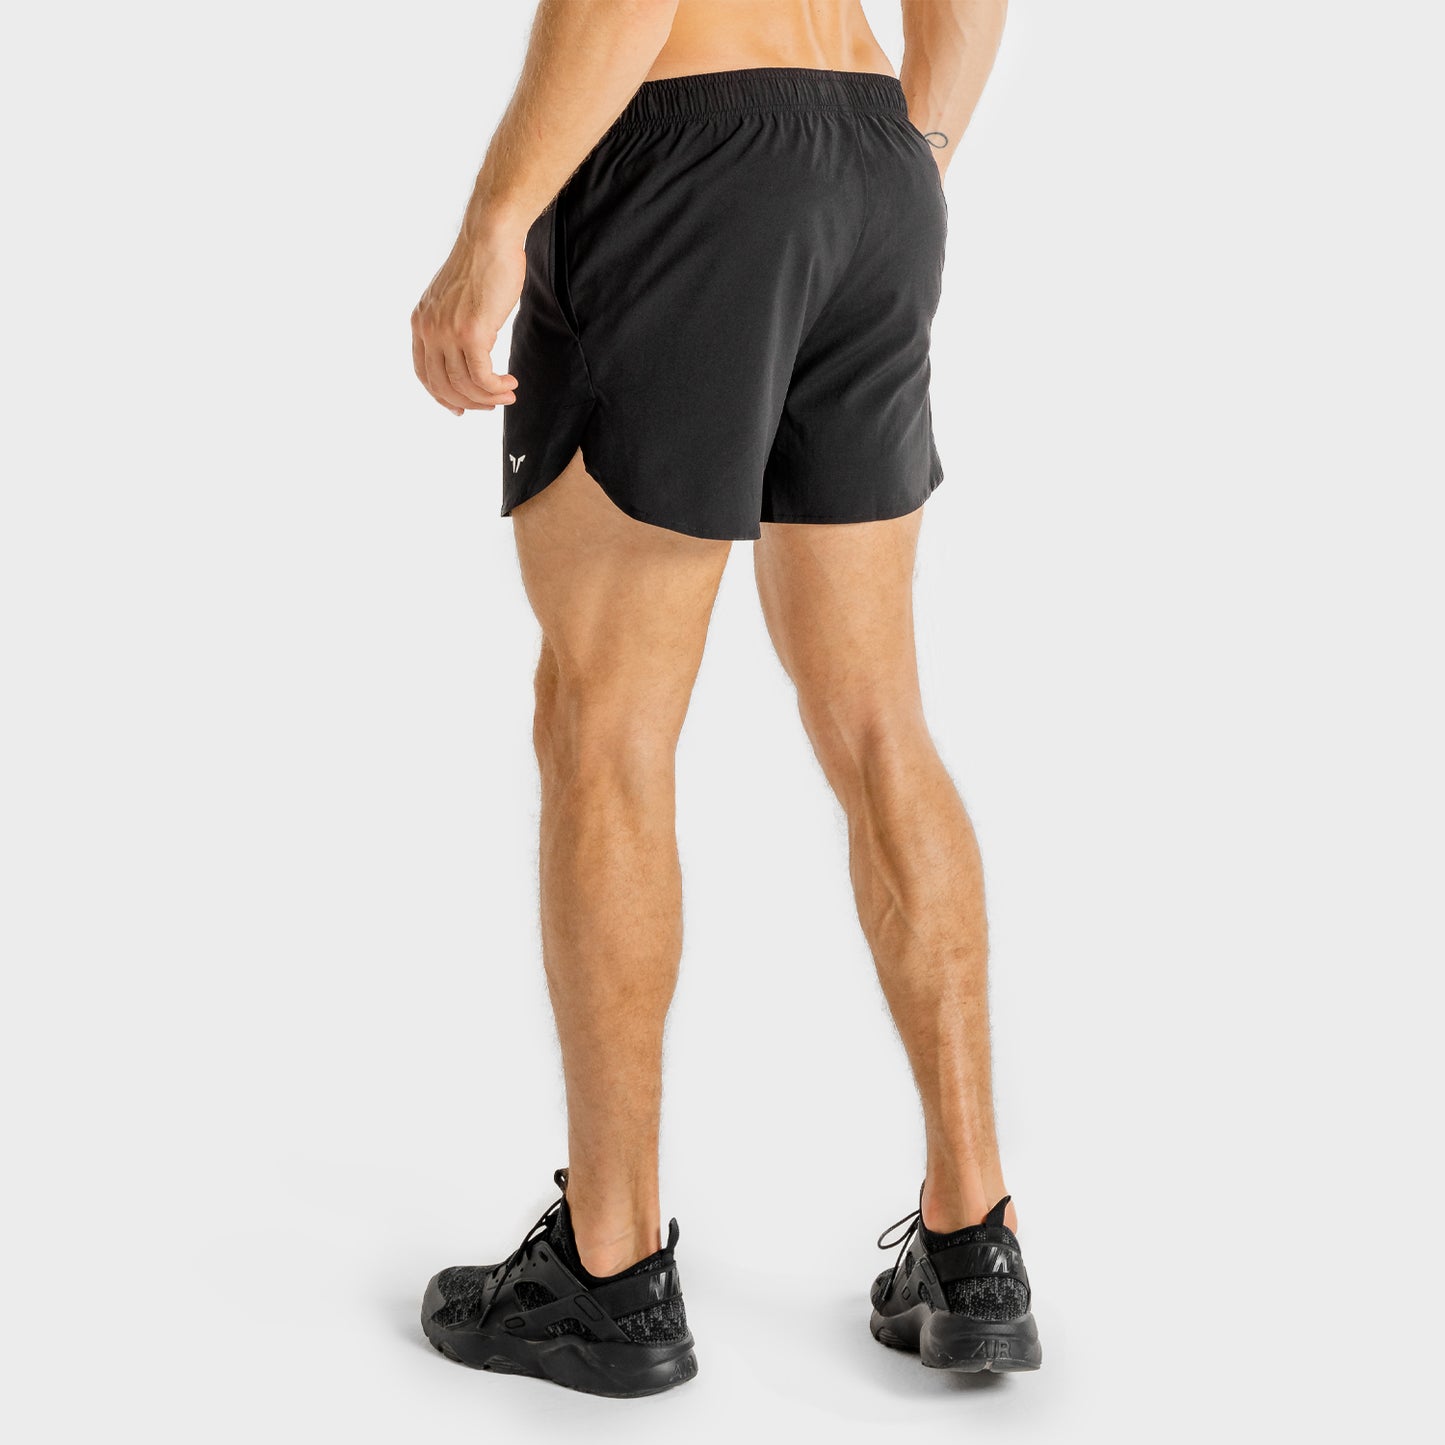 AE | Core Shorts - Black | Gym Shorts Men | SQUATWOLF | Shorts